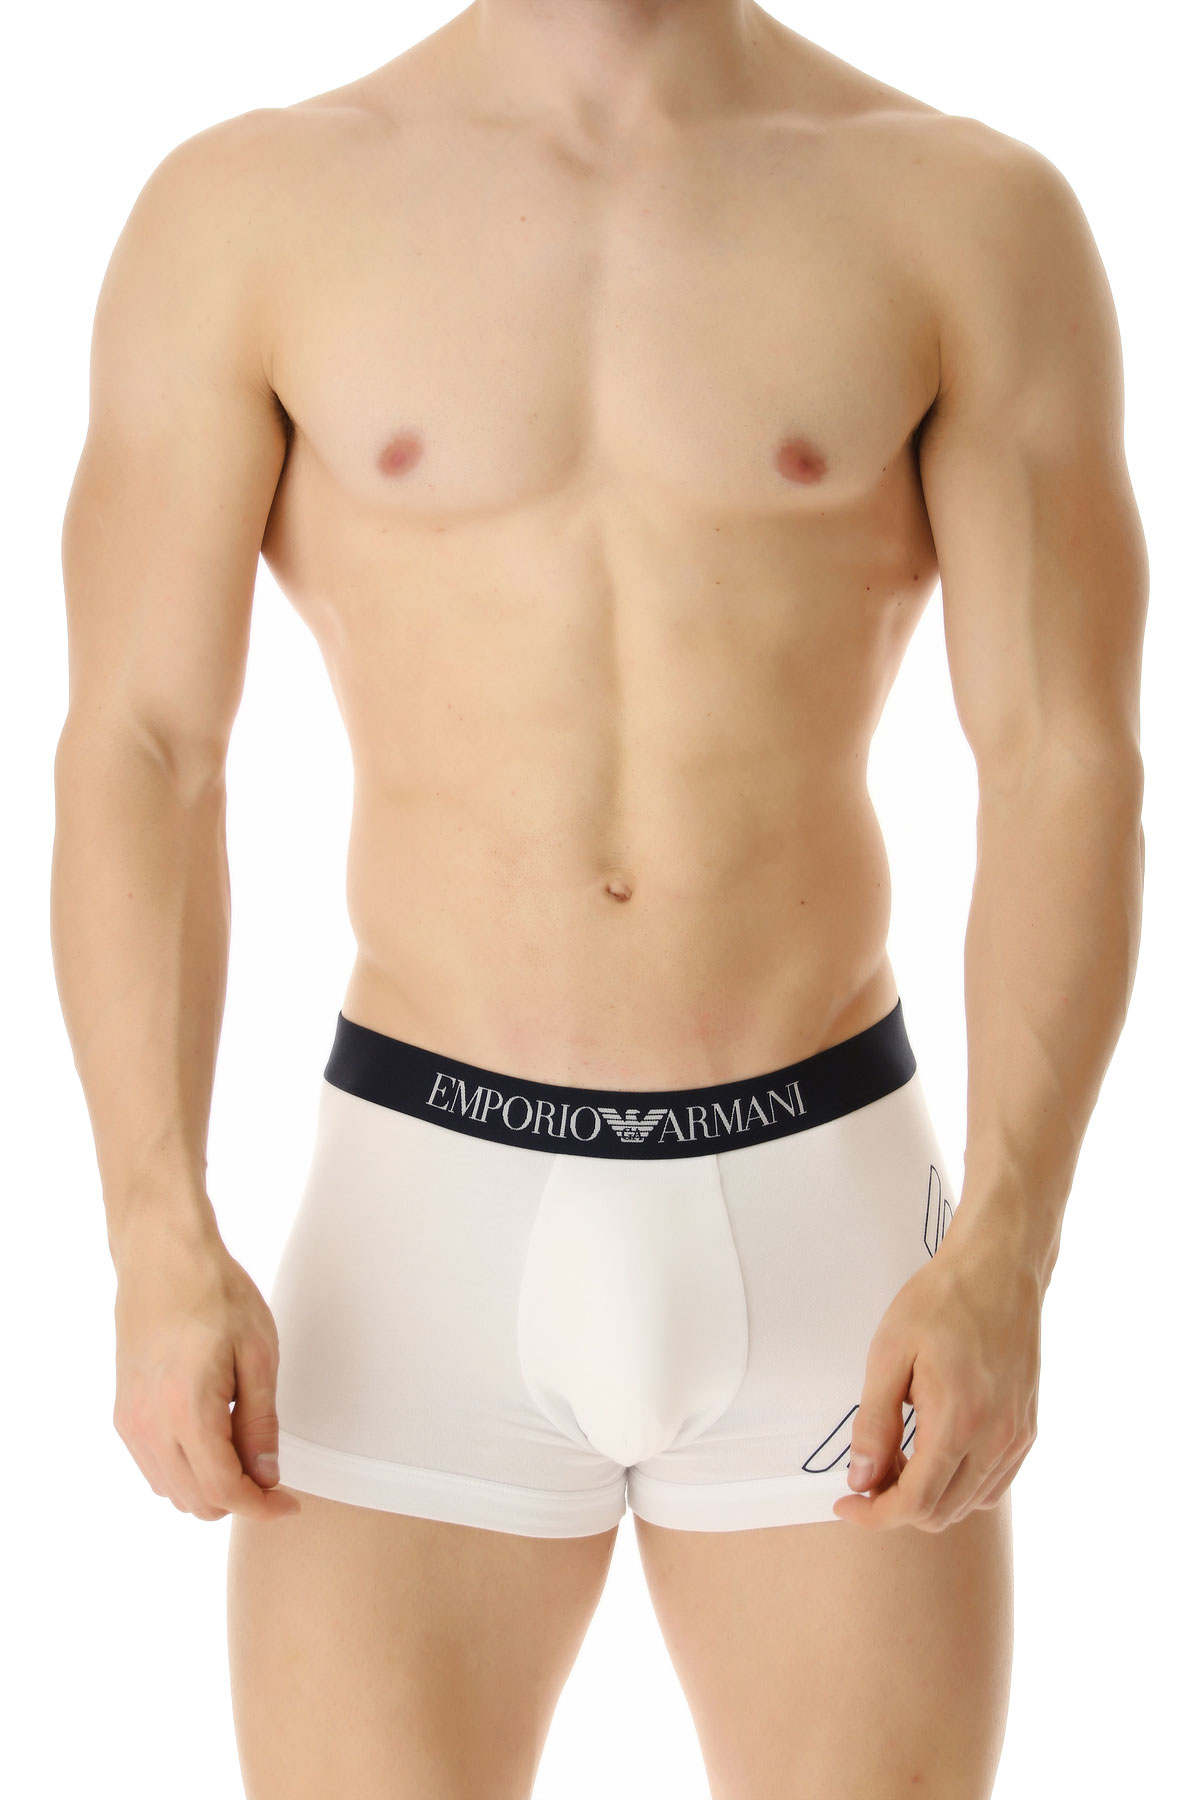 emporio armani underwear sale